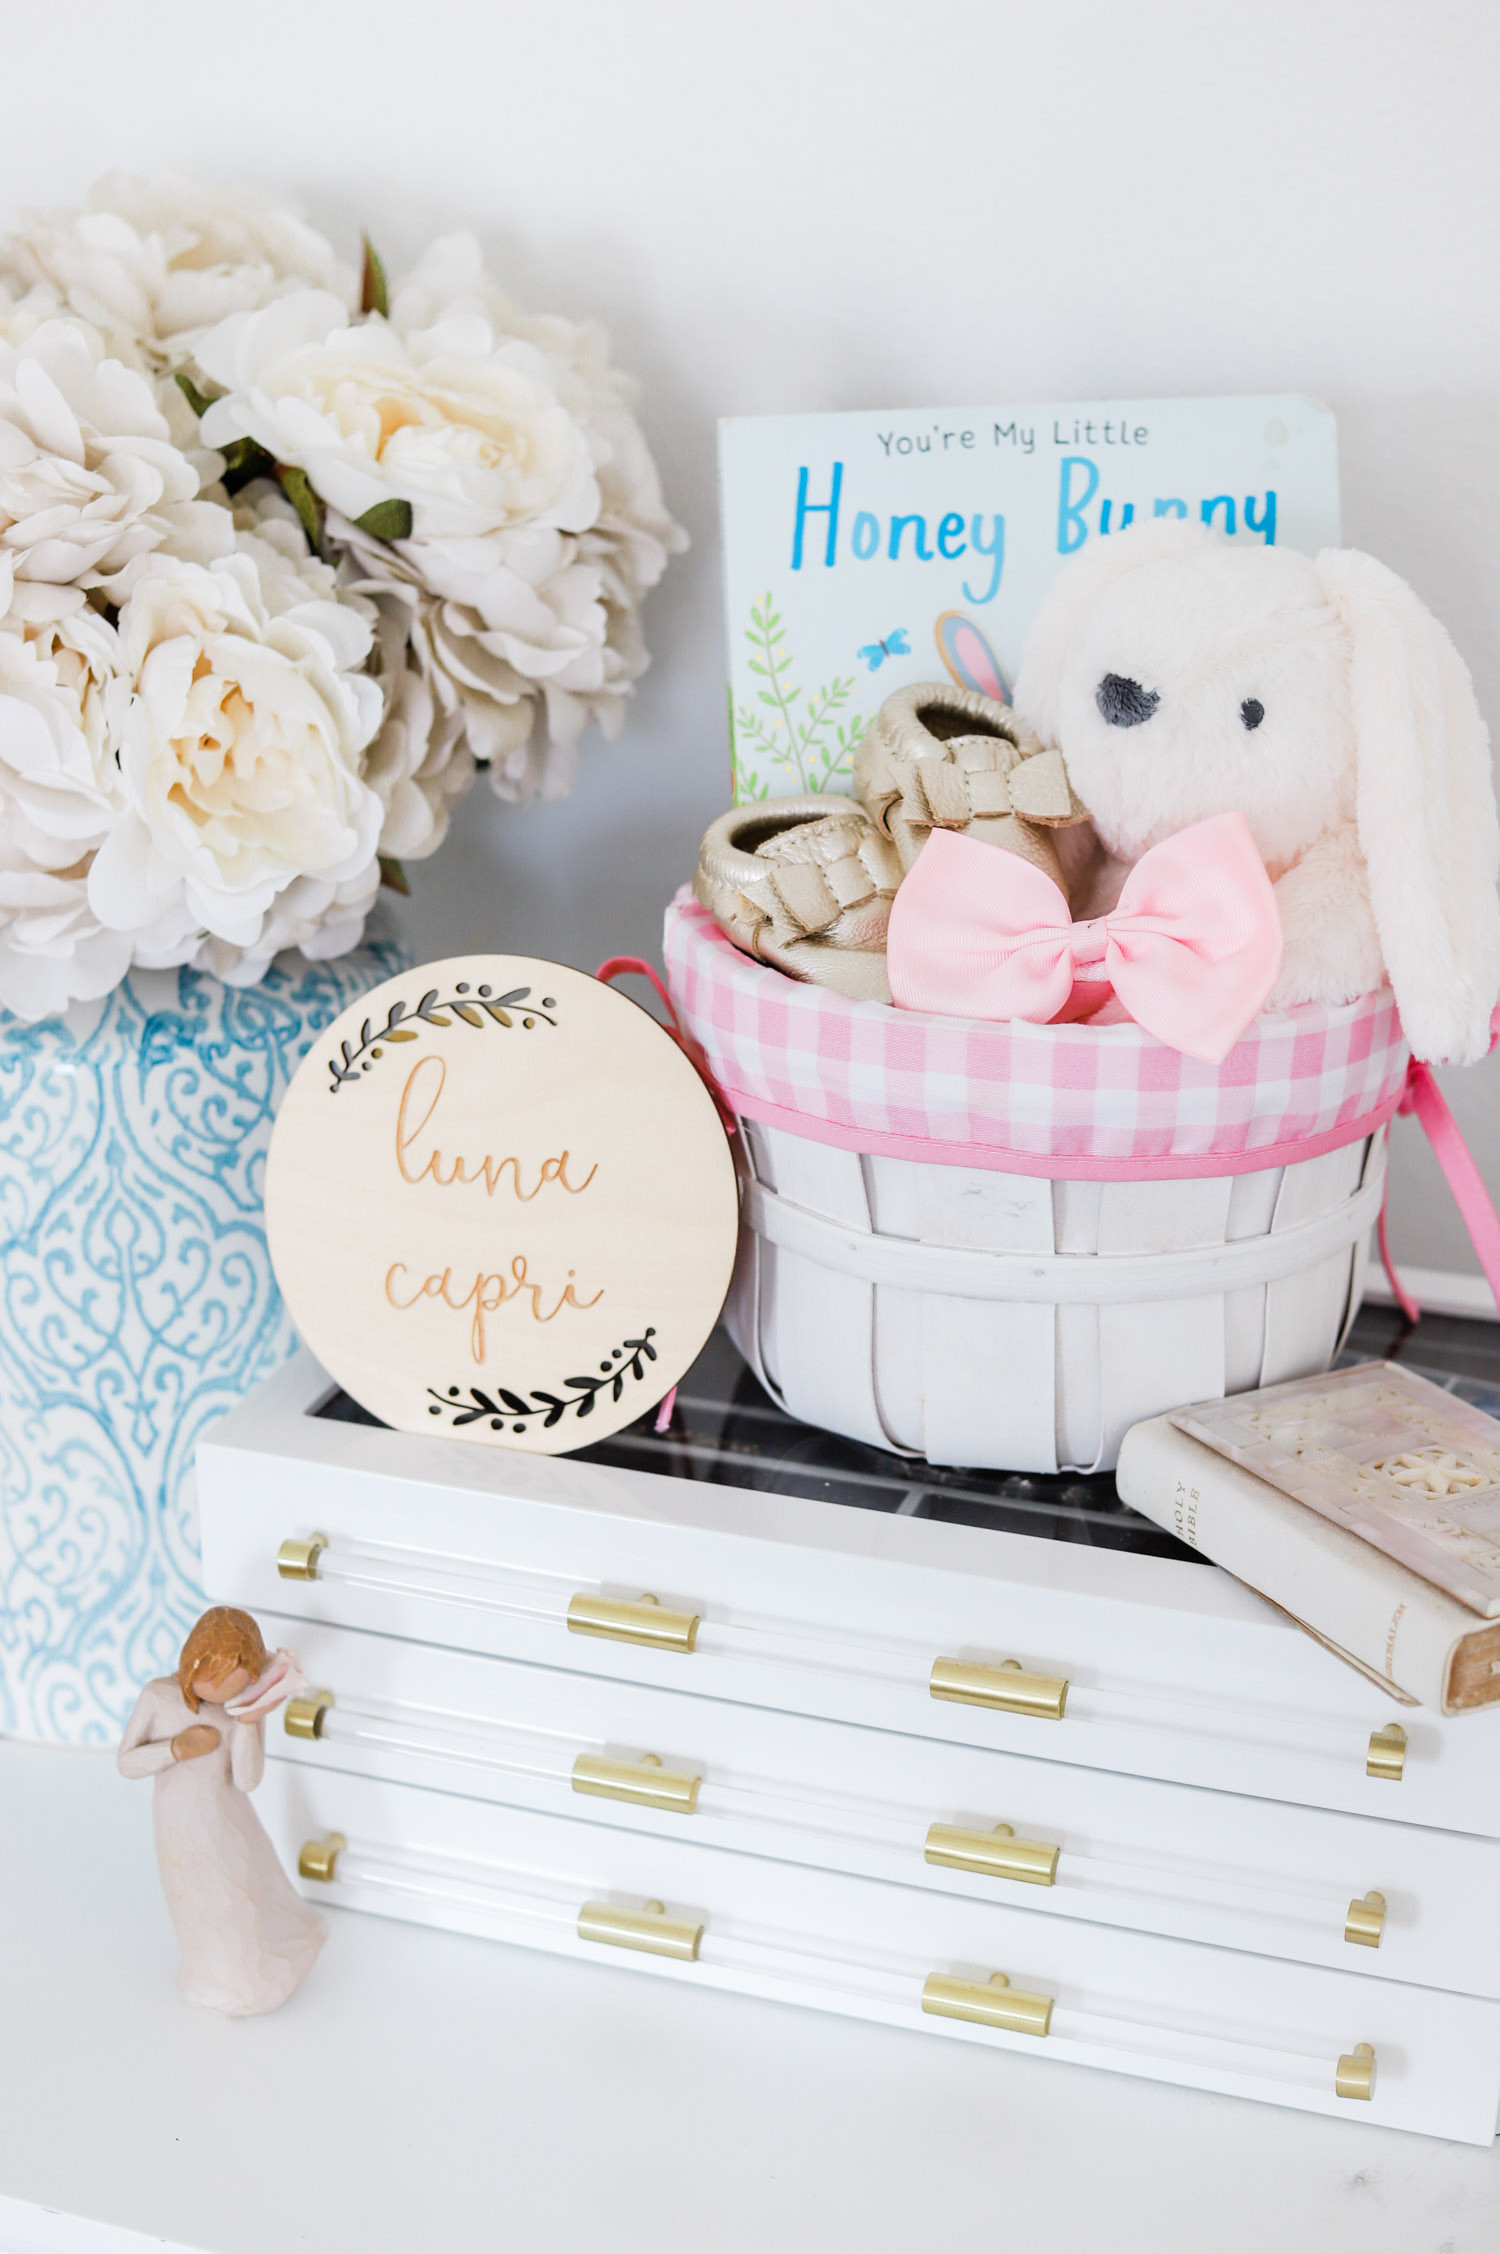 Ideas For Baby Easter Basket
 Cute Easter Basket Ideas for Babies Ashley Brooke Nicholas